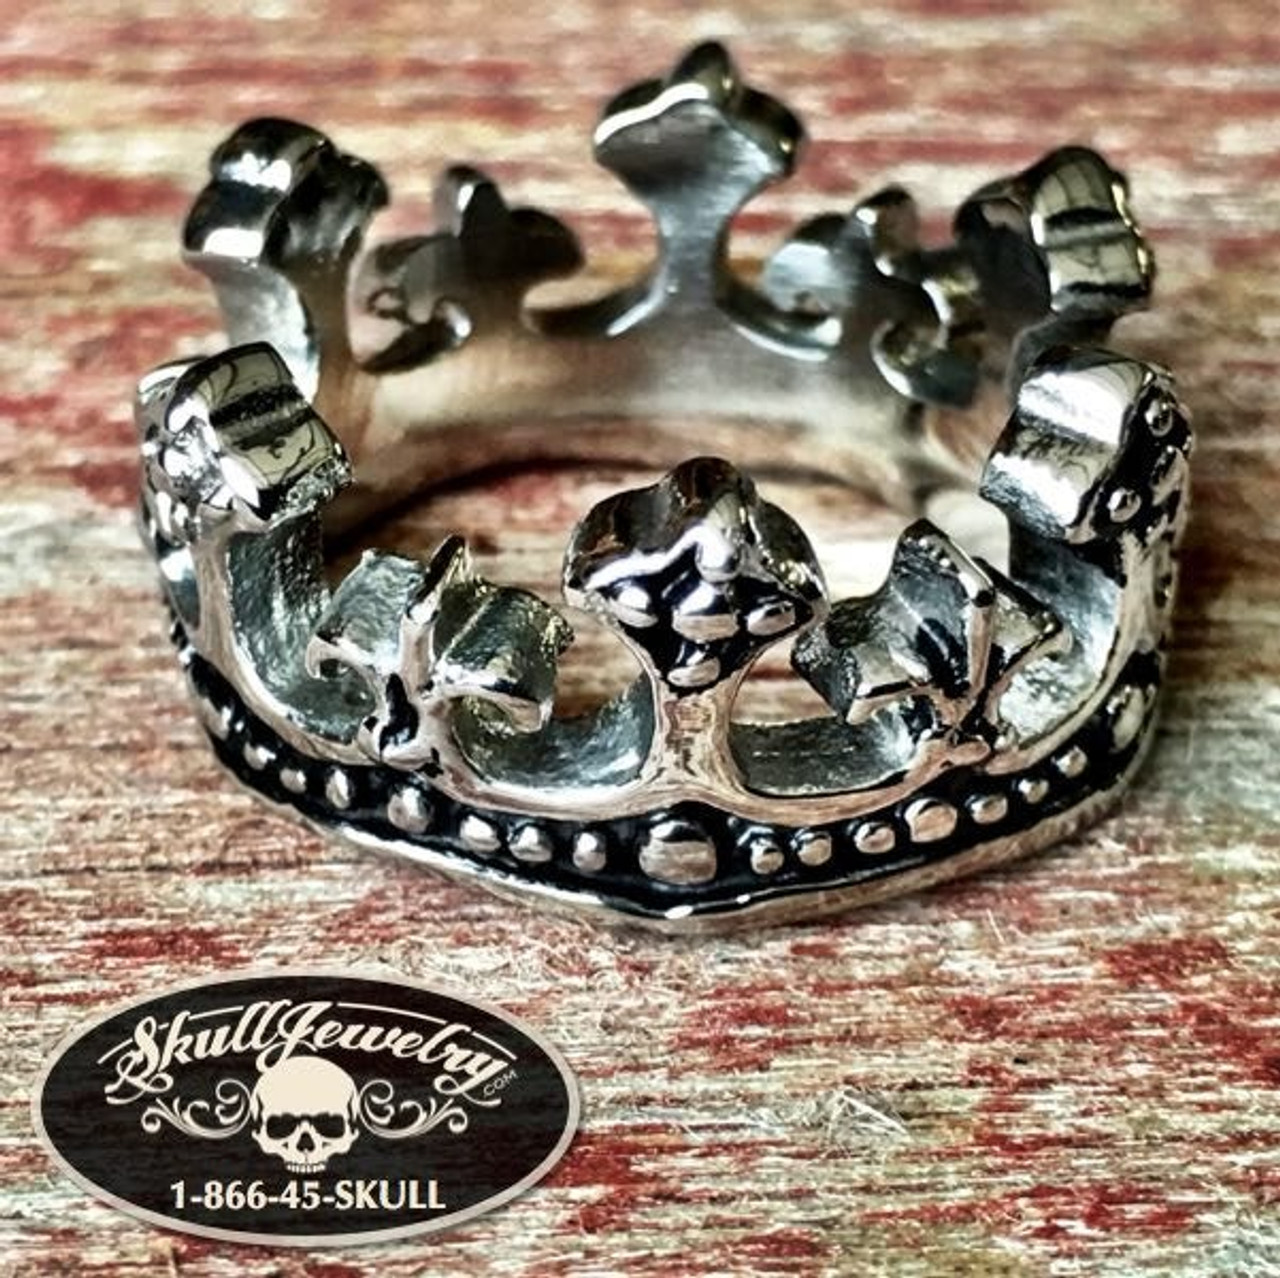 Limited Edition Silver Crowned Men's Skull Ring - Men's Rings | Lazaro SoHo